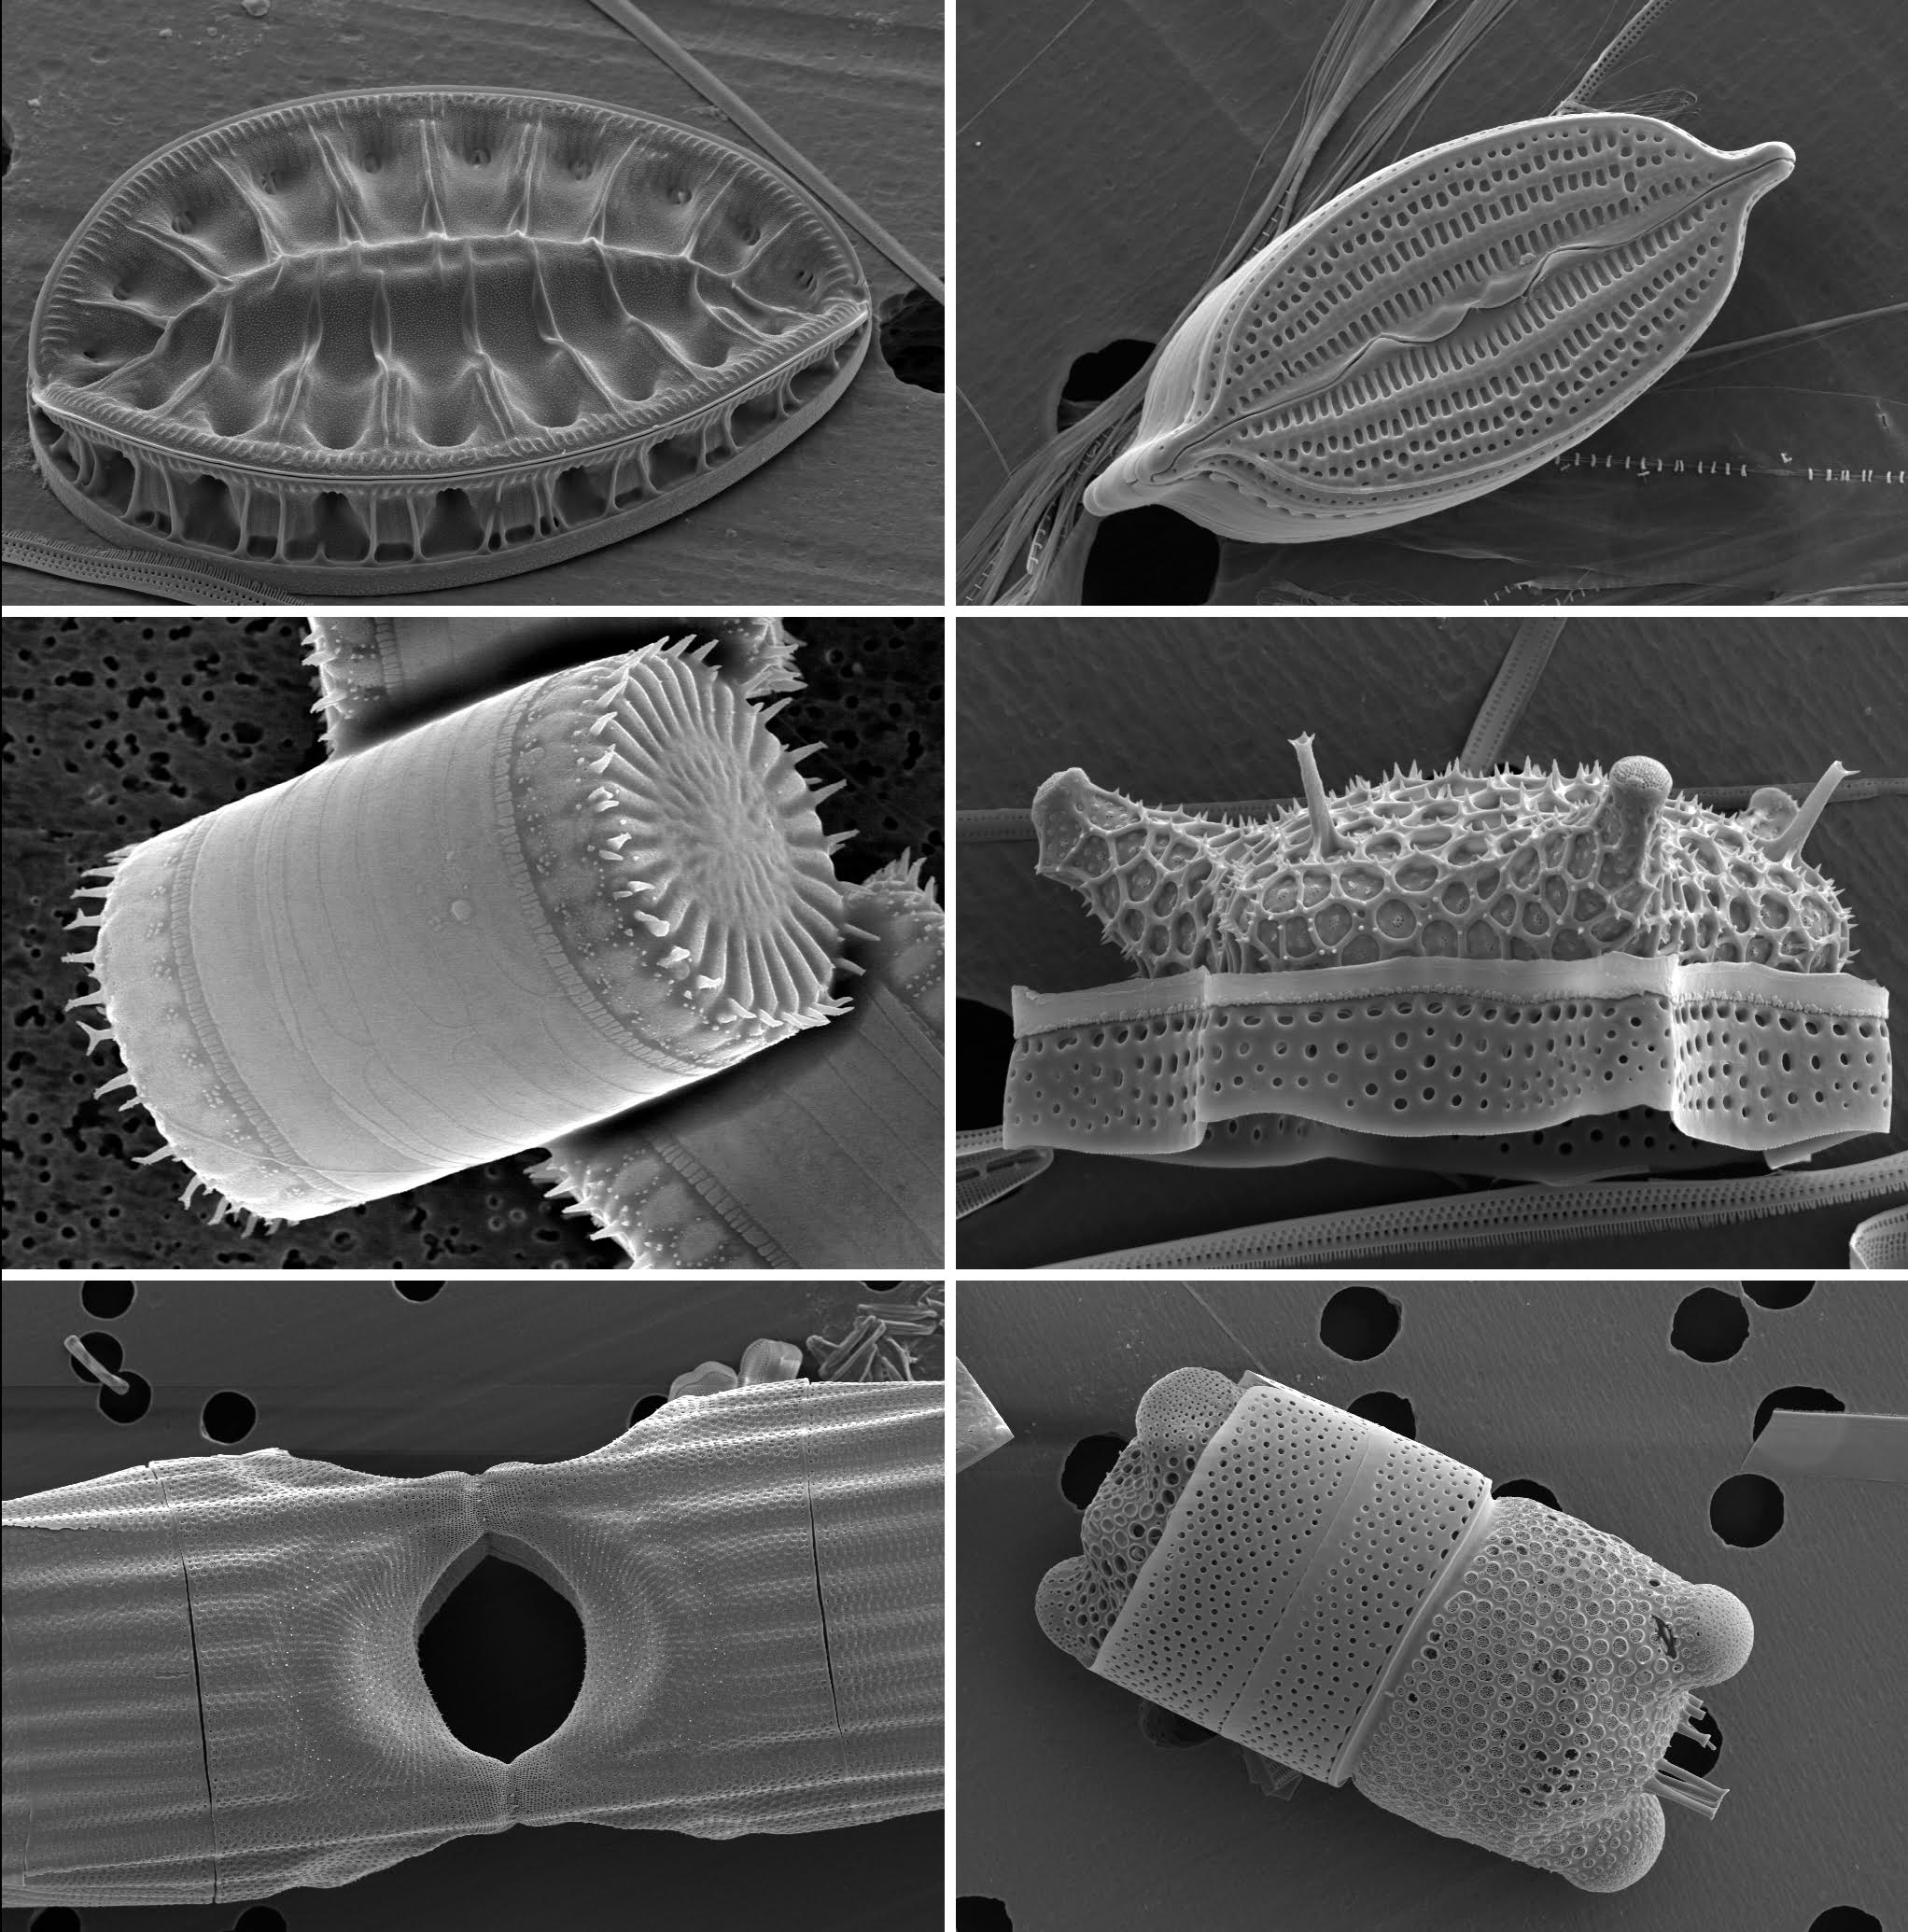 Scanning electron micrographs reveal six diatom species 